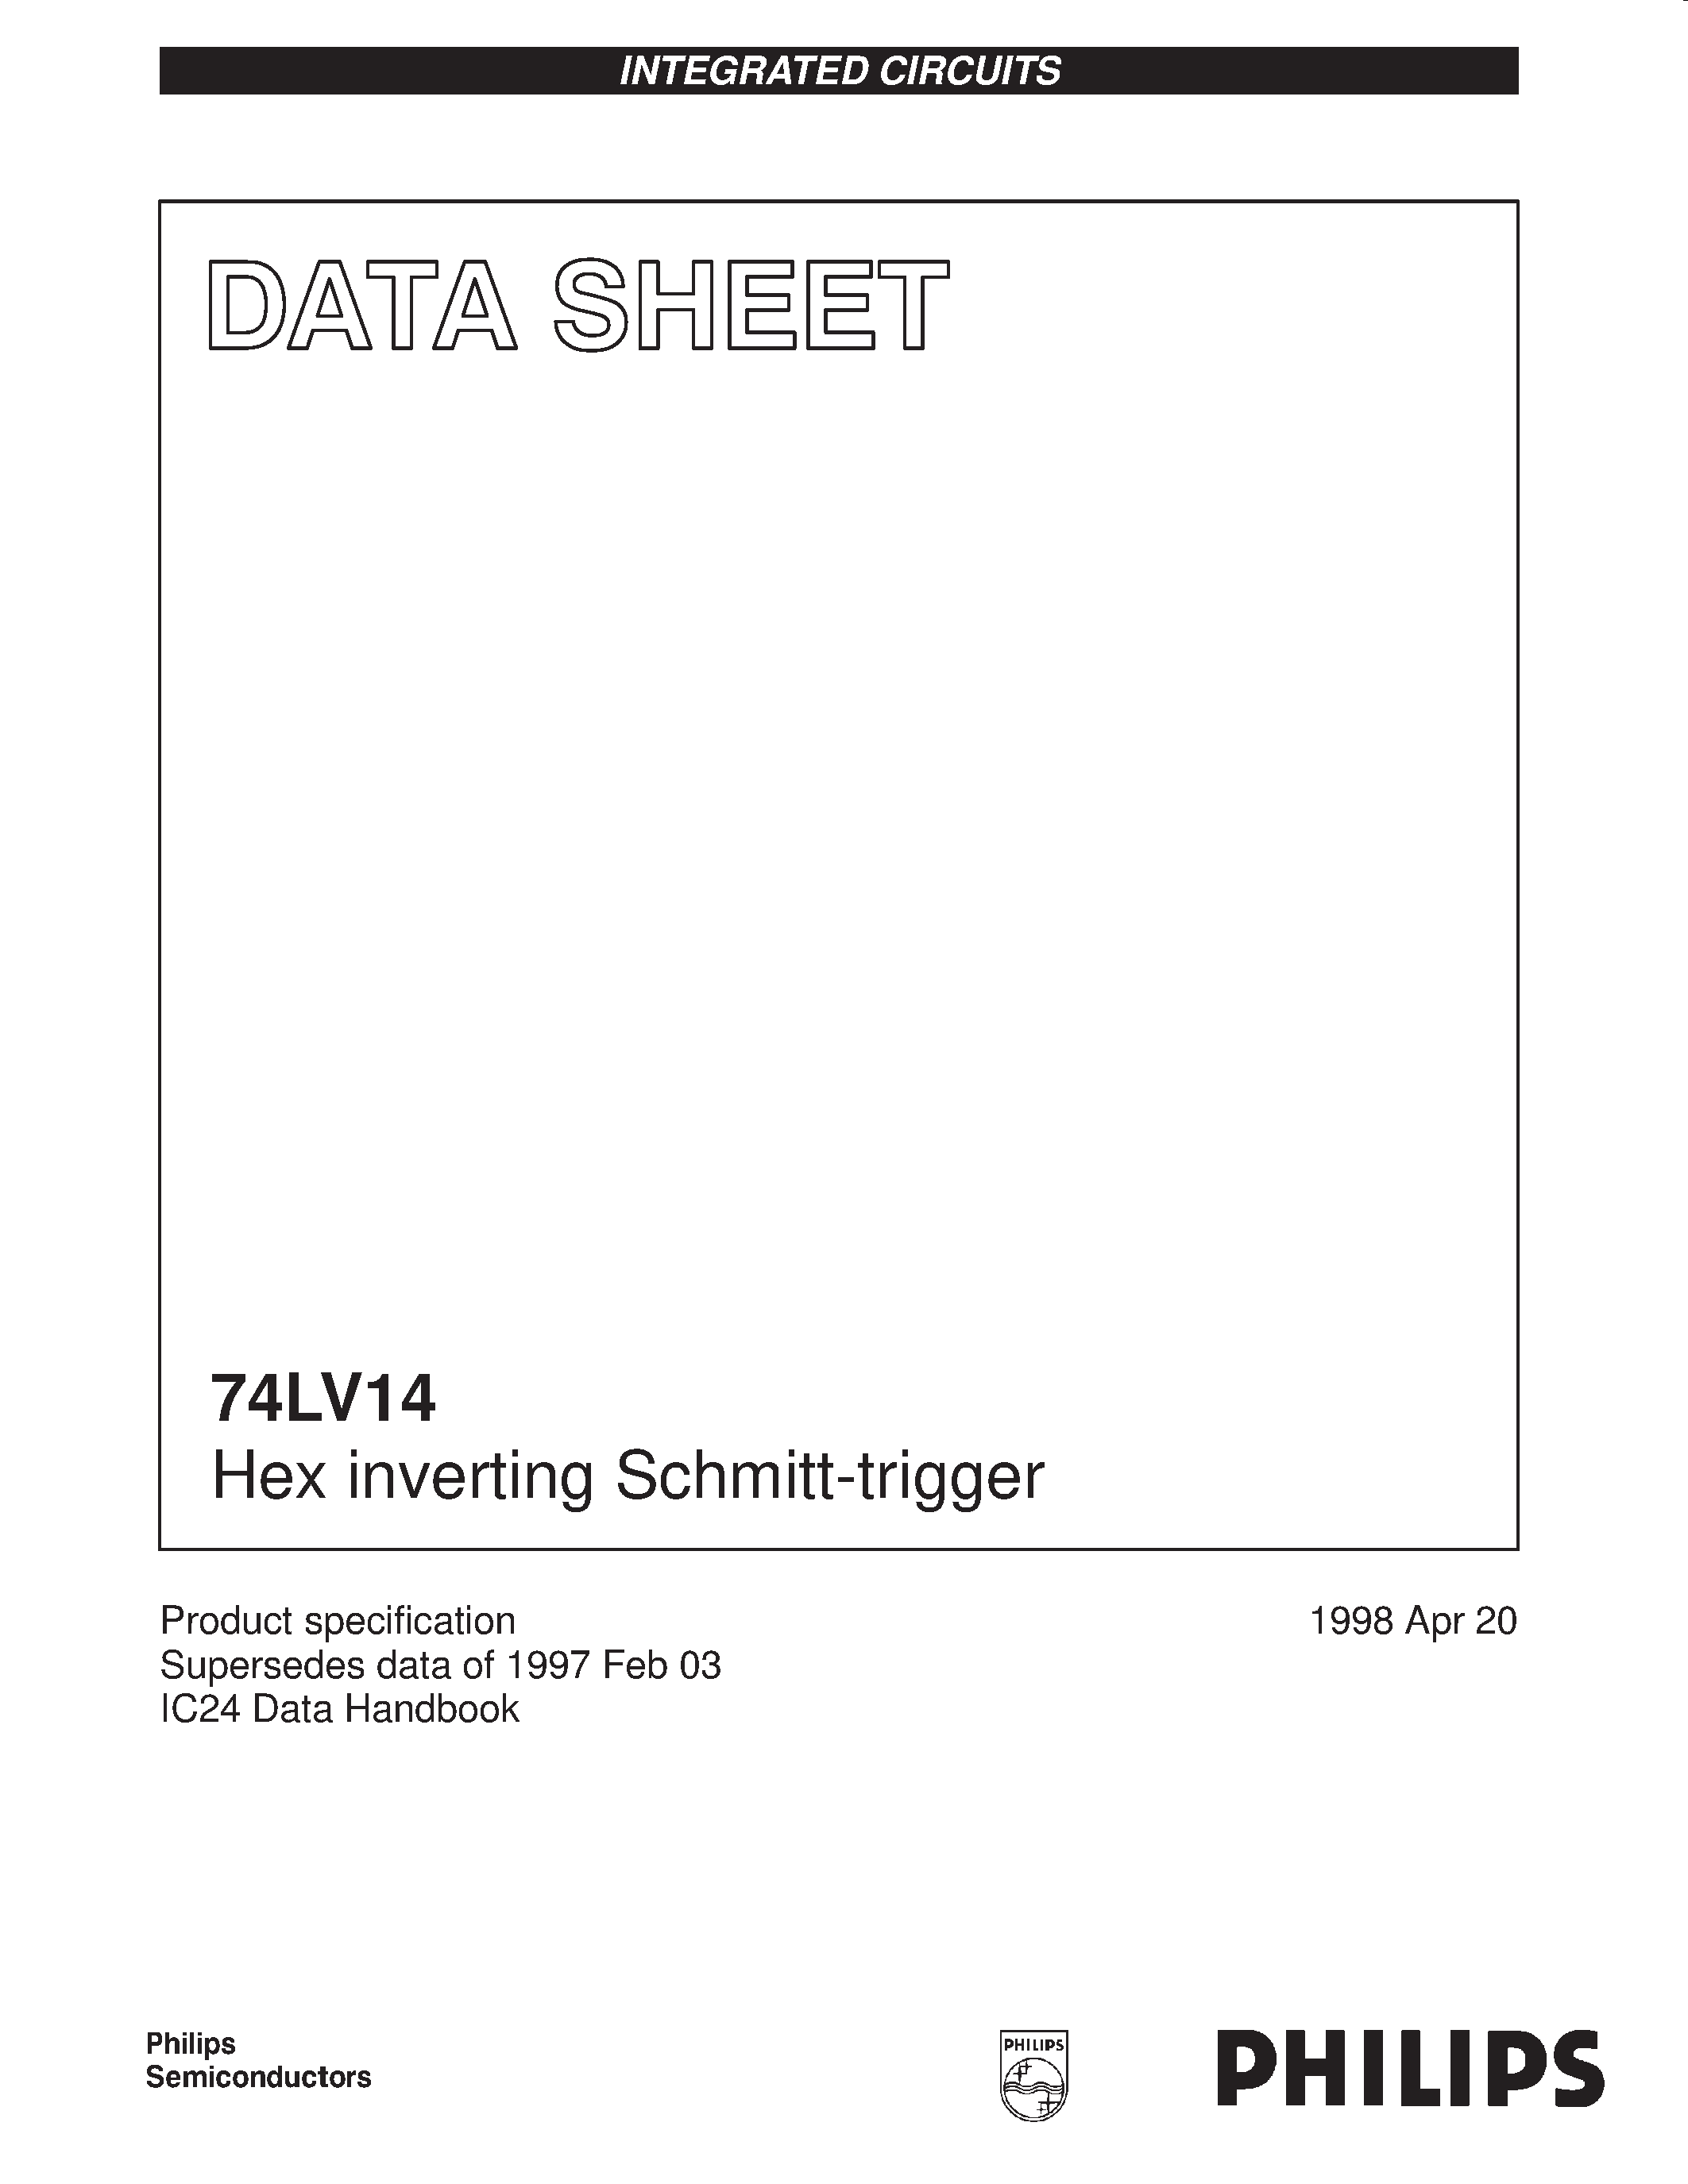 Даташит 74LV14 - Hex inverting Schmitt-trigger страница 1